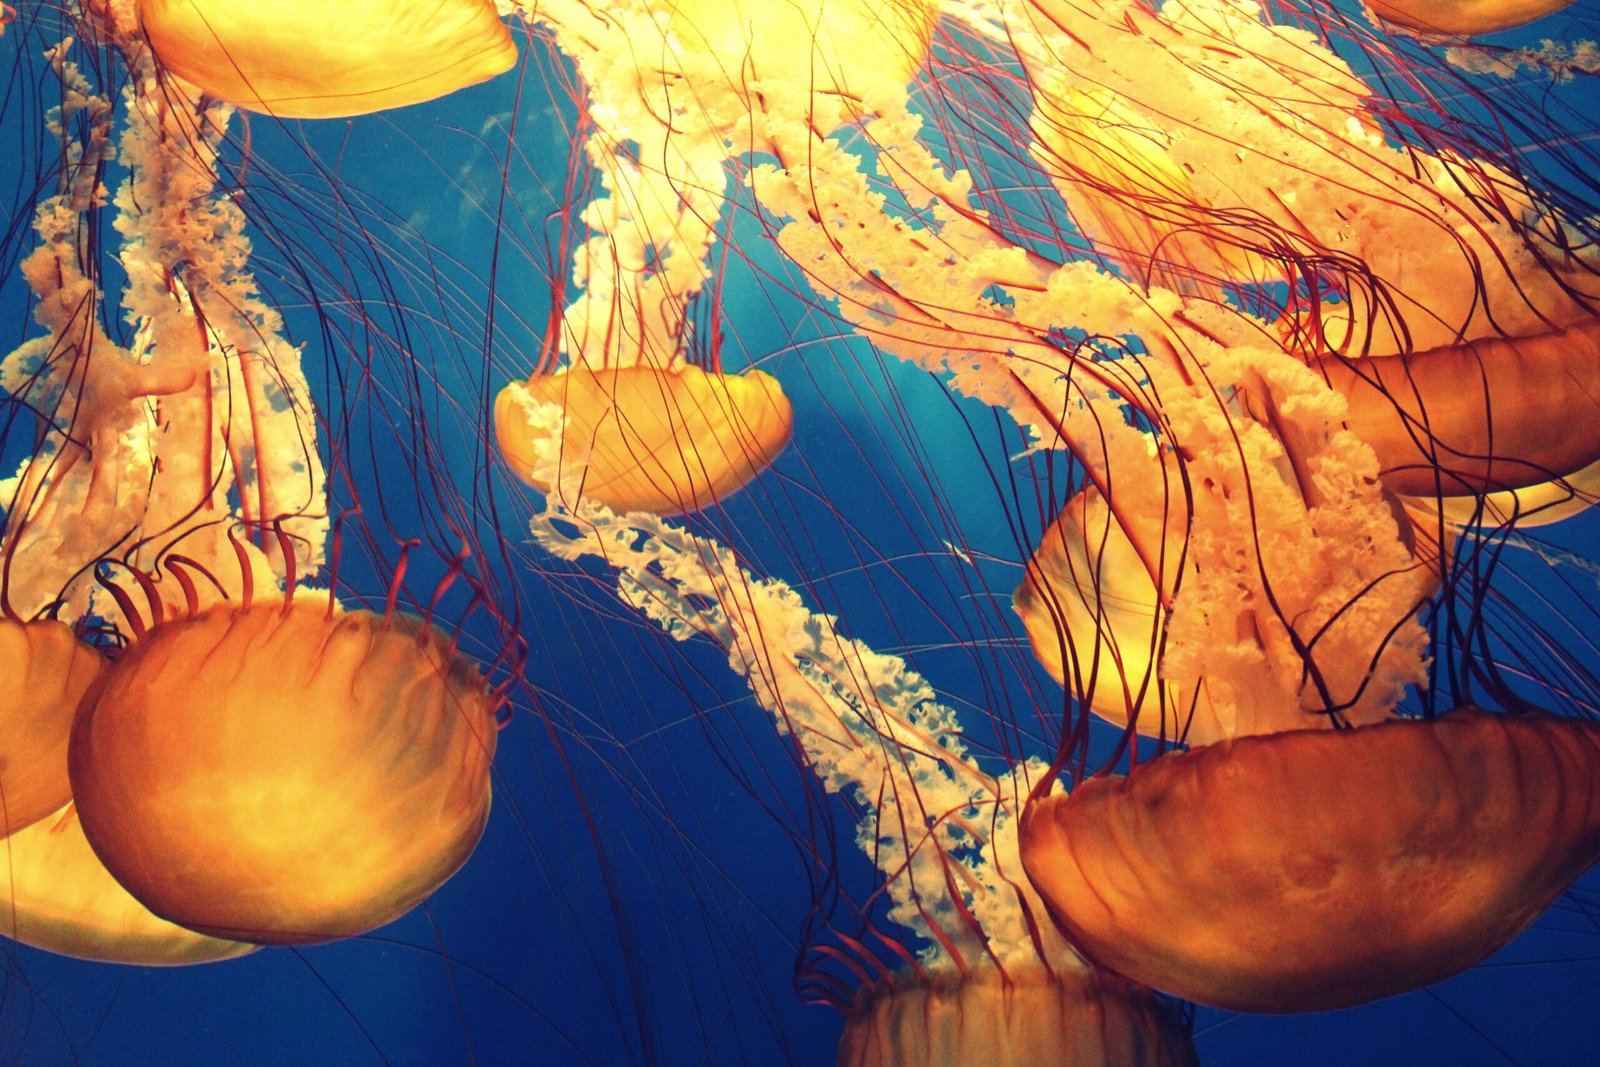 A photograph of yellow jellyfish swimming